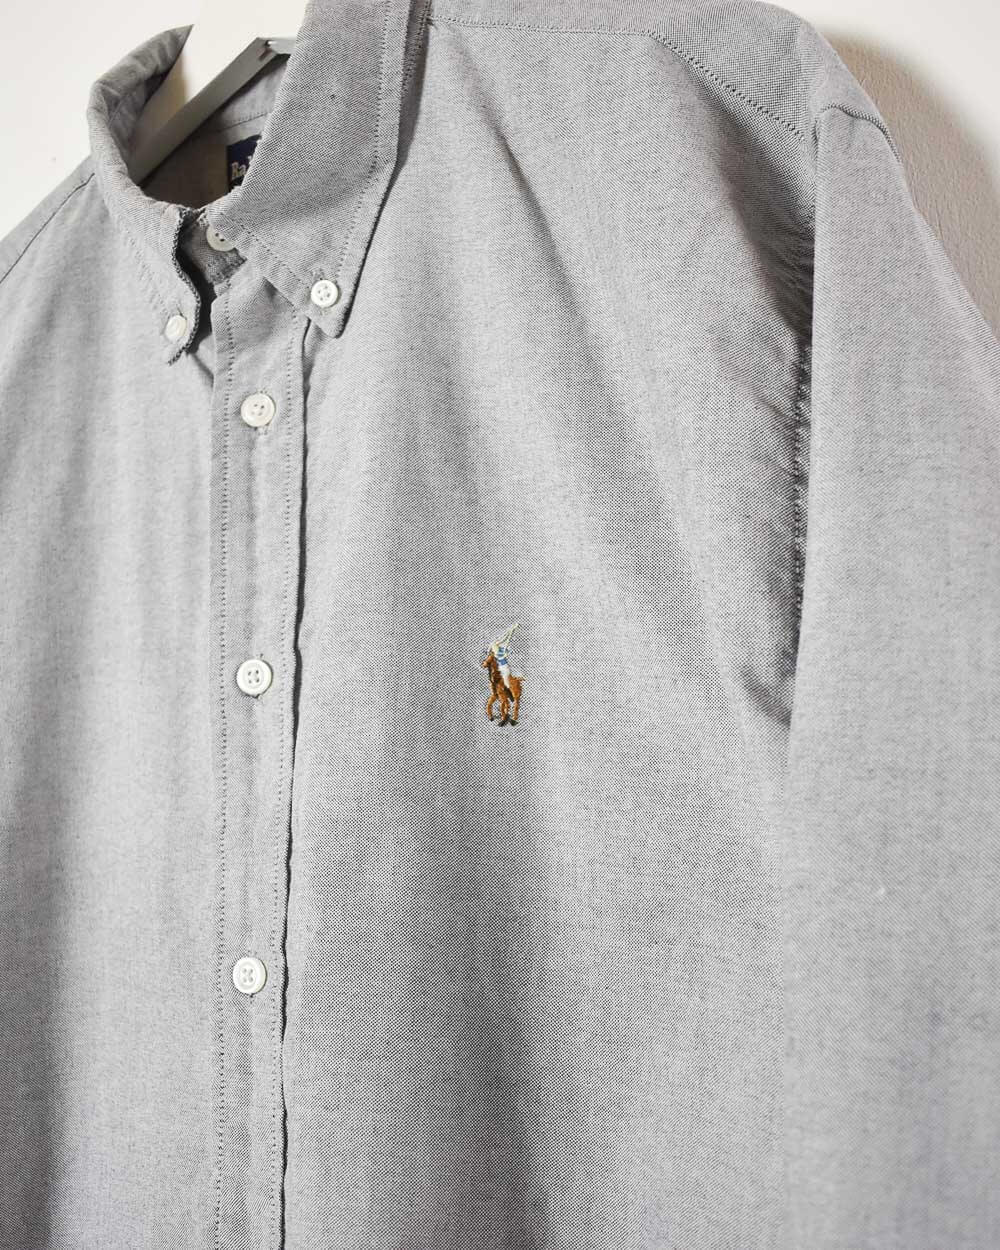 Stone Ralph Lauren Shirt - X-Large